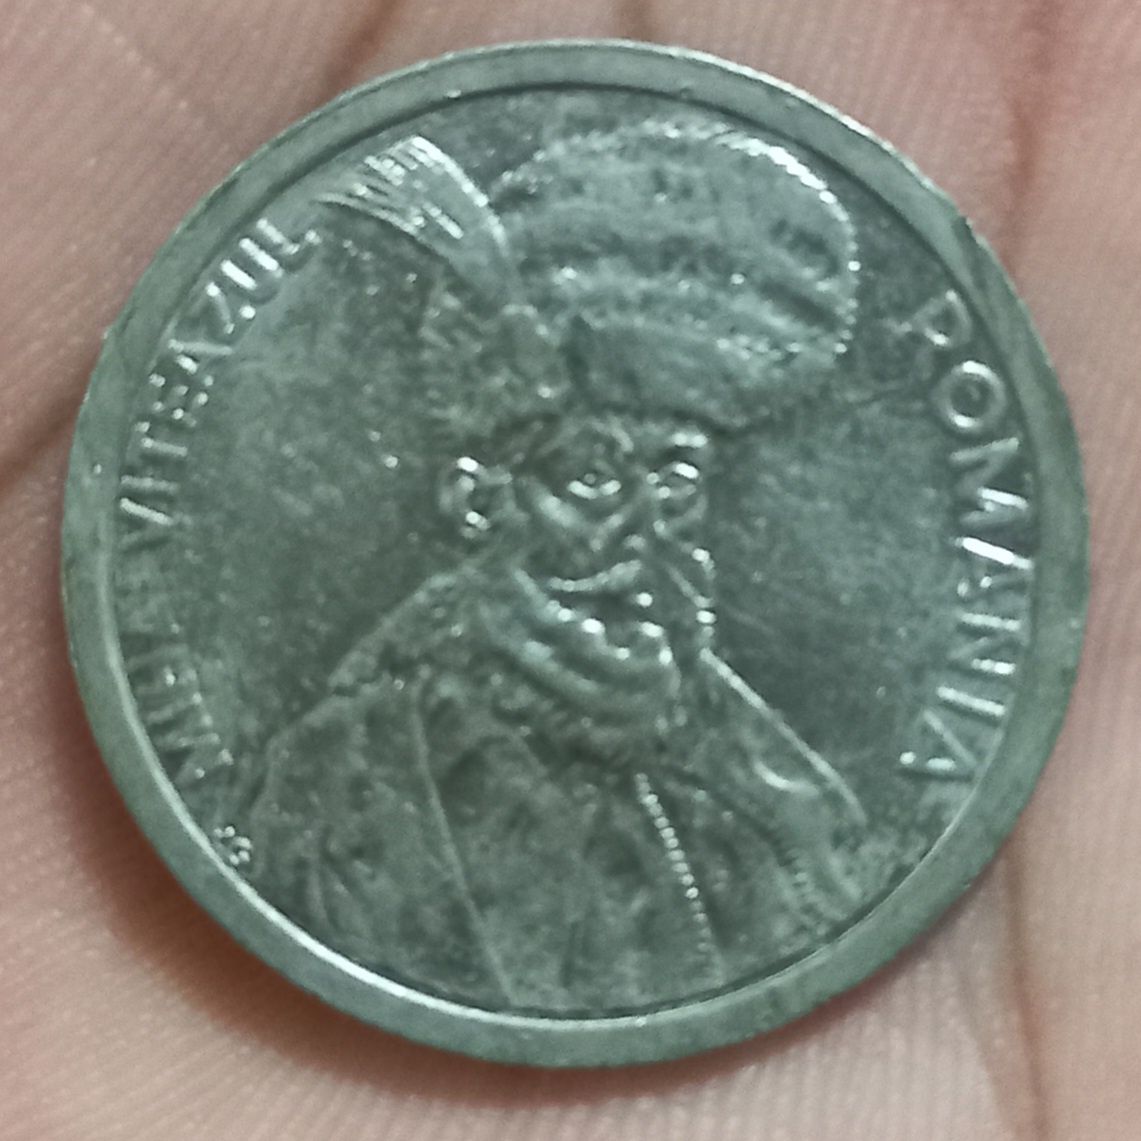 Monede Vechi de 100 lei an 1993 Mihai Viteazu